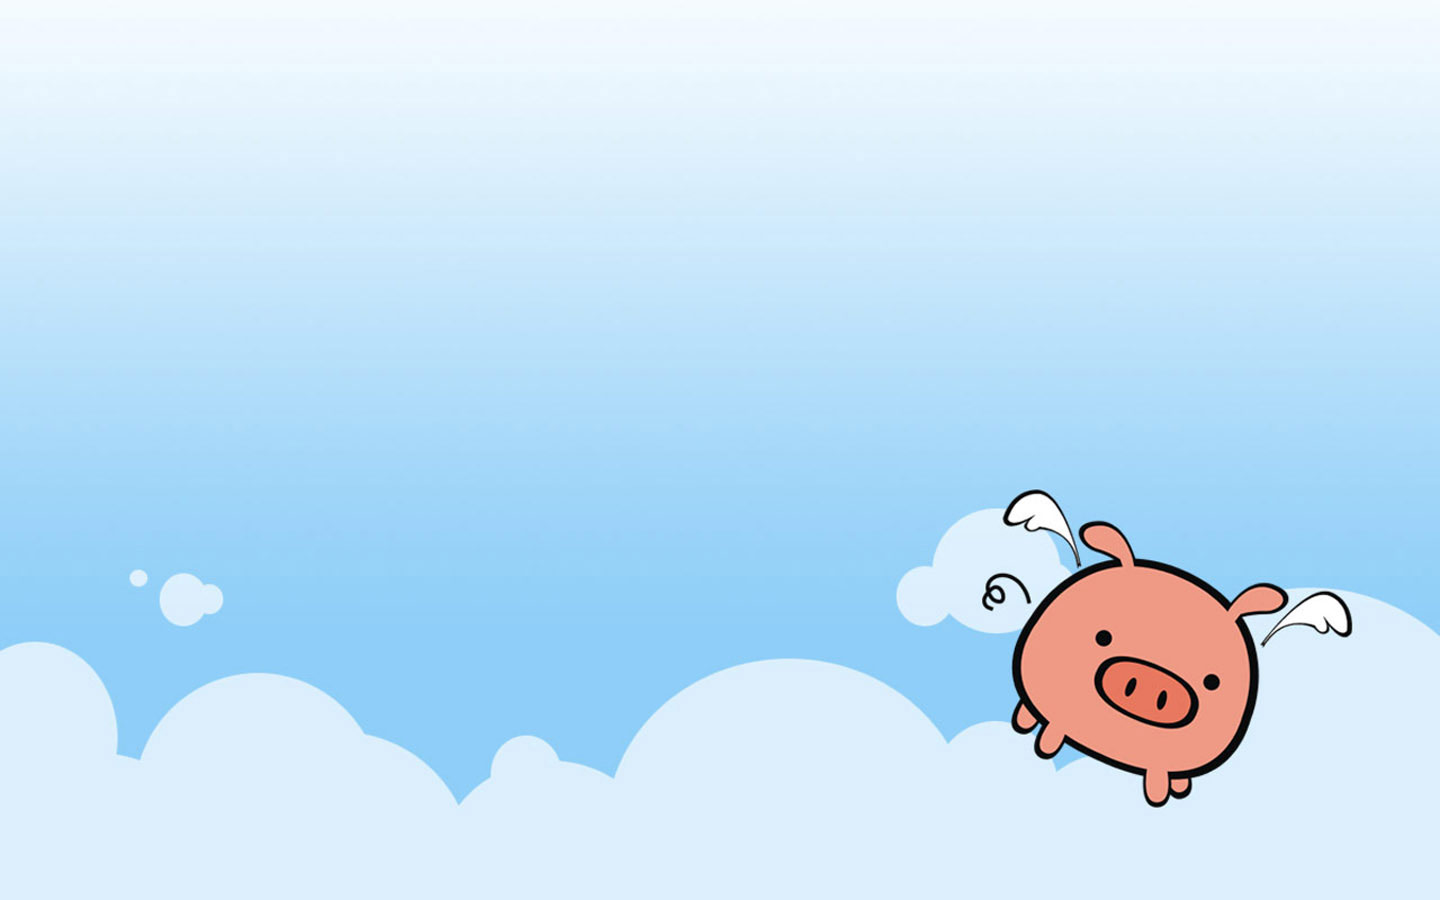 The Cute Pig Illustrator Wallpaper Ics Desktop Background Cartoon